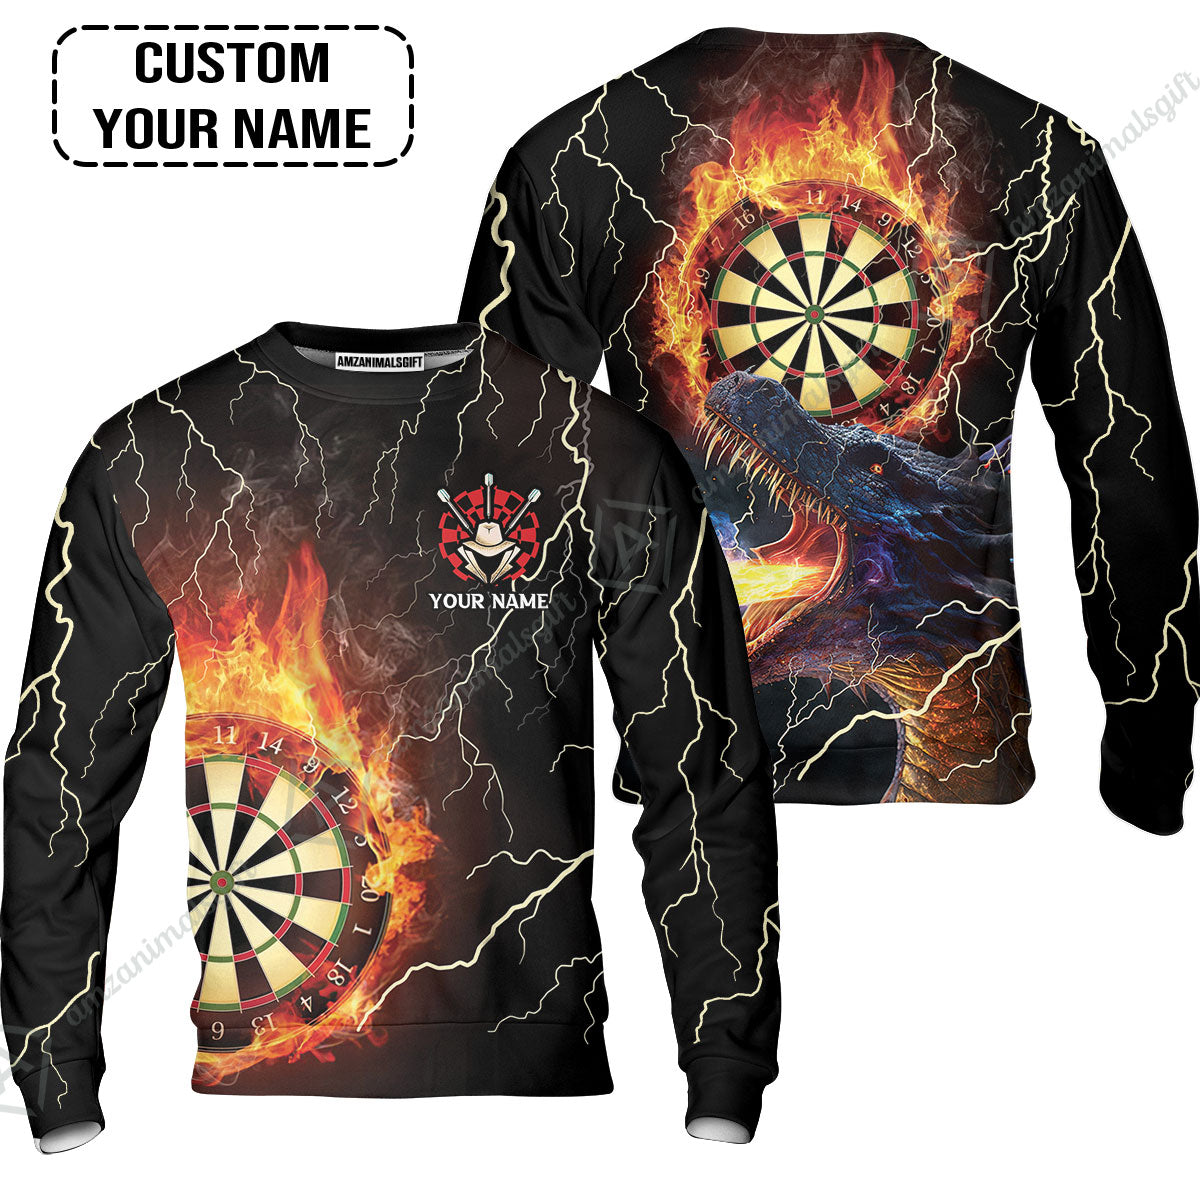 Customized Darts Sweatshirt, Flame Dartboard, Personalized Name Dragon And Darts Sweatshirt - Perfect Gift For Darts Lovers